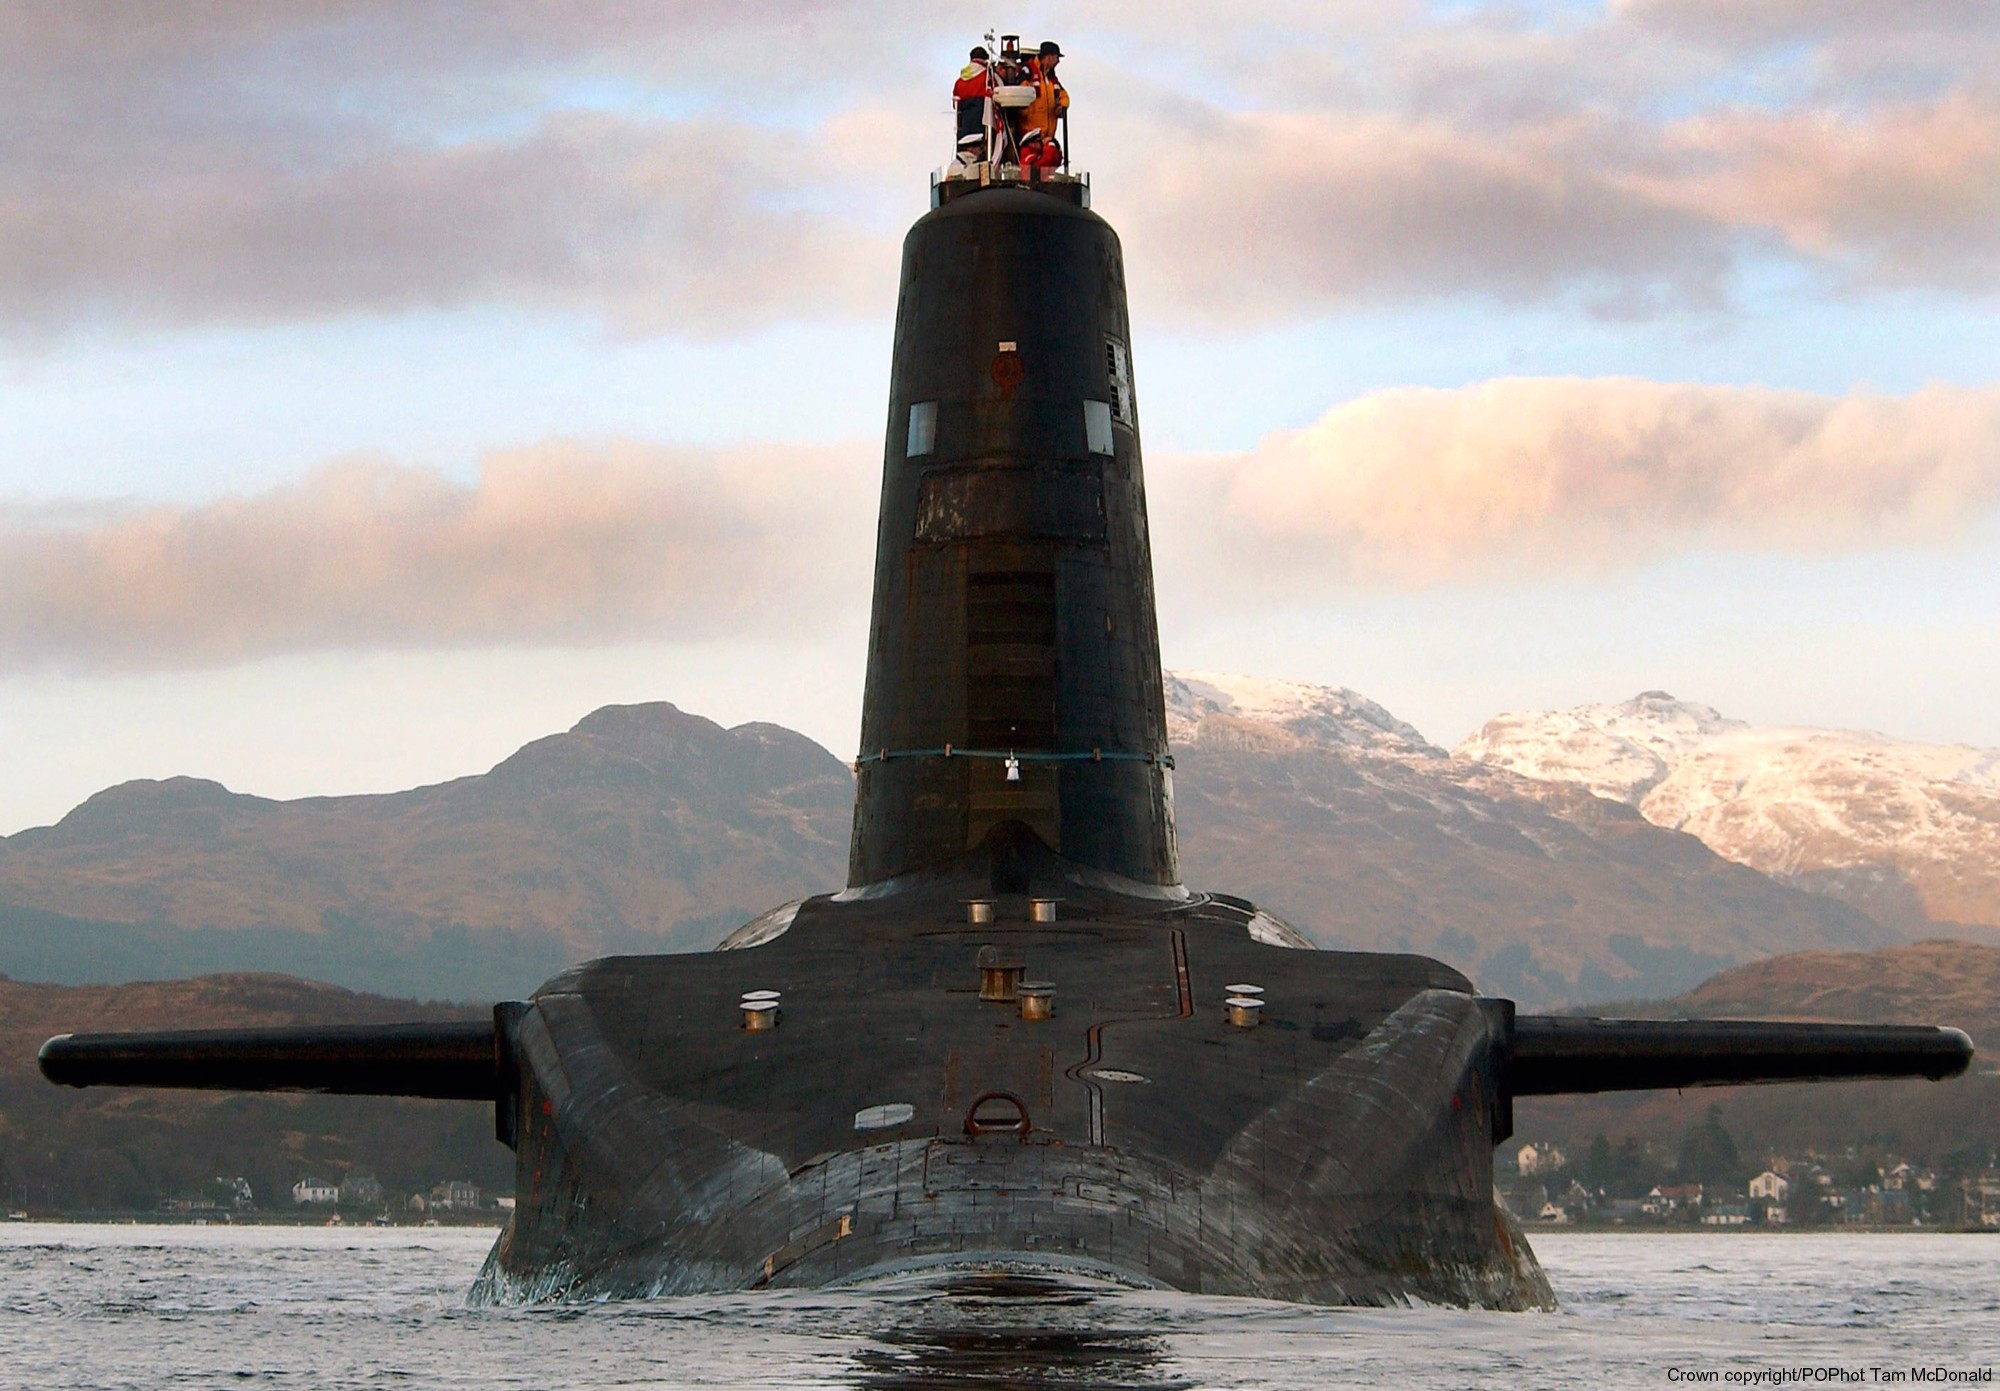 s29 hms victorious ssbn vanguard class ballistic missile submarine trident slbm royal navy 07